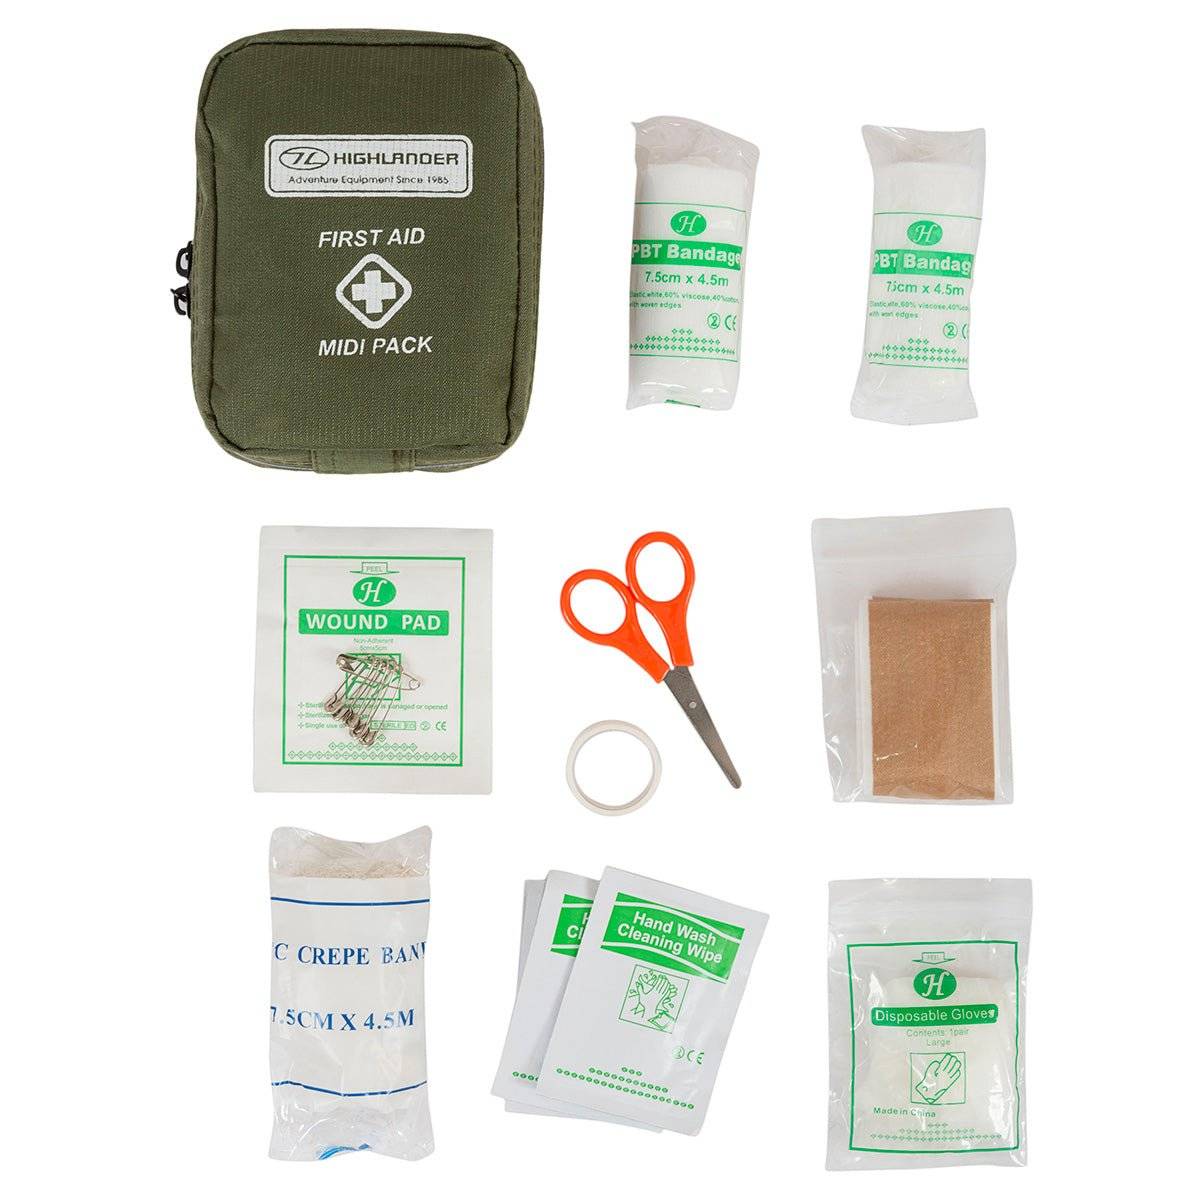 Highlander Military Midi First Aid Kit - John Bull Clothing